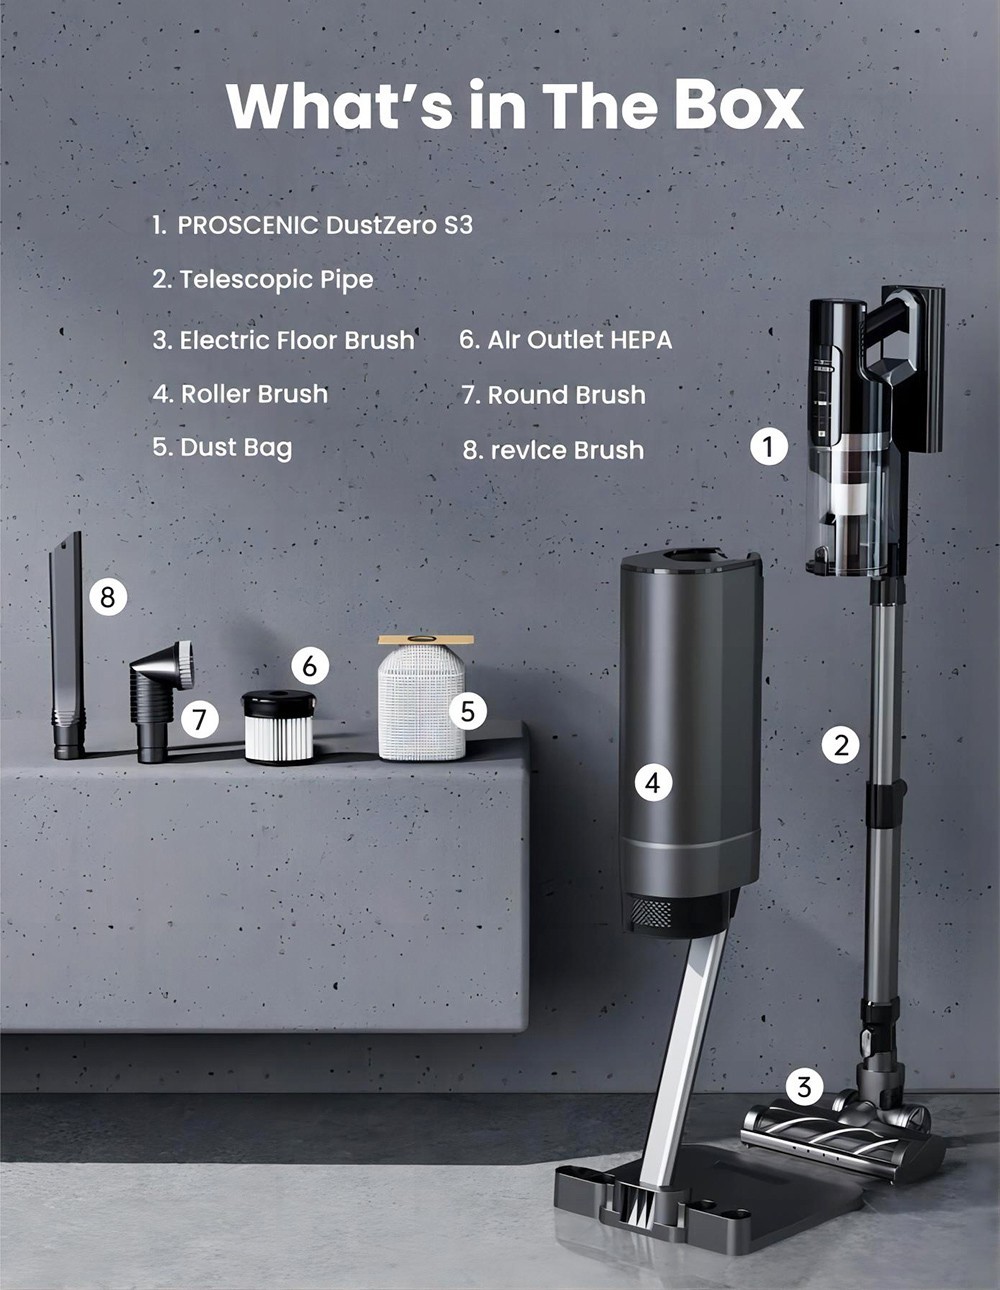 Proscenic DustZero S3 Cordless Vacuum Cleaner